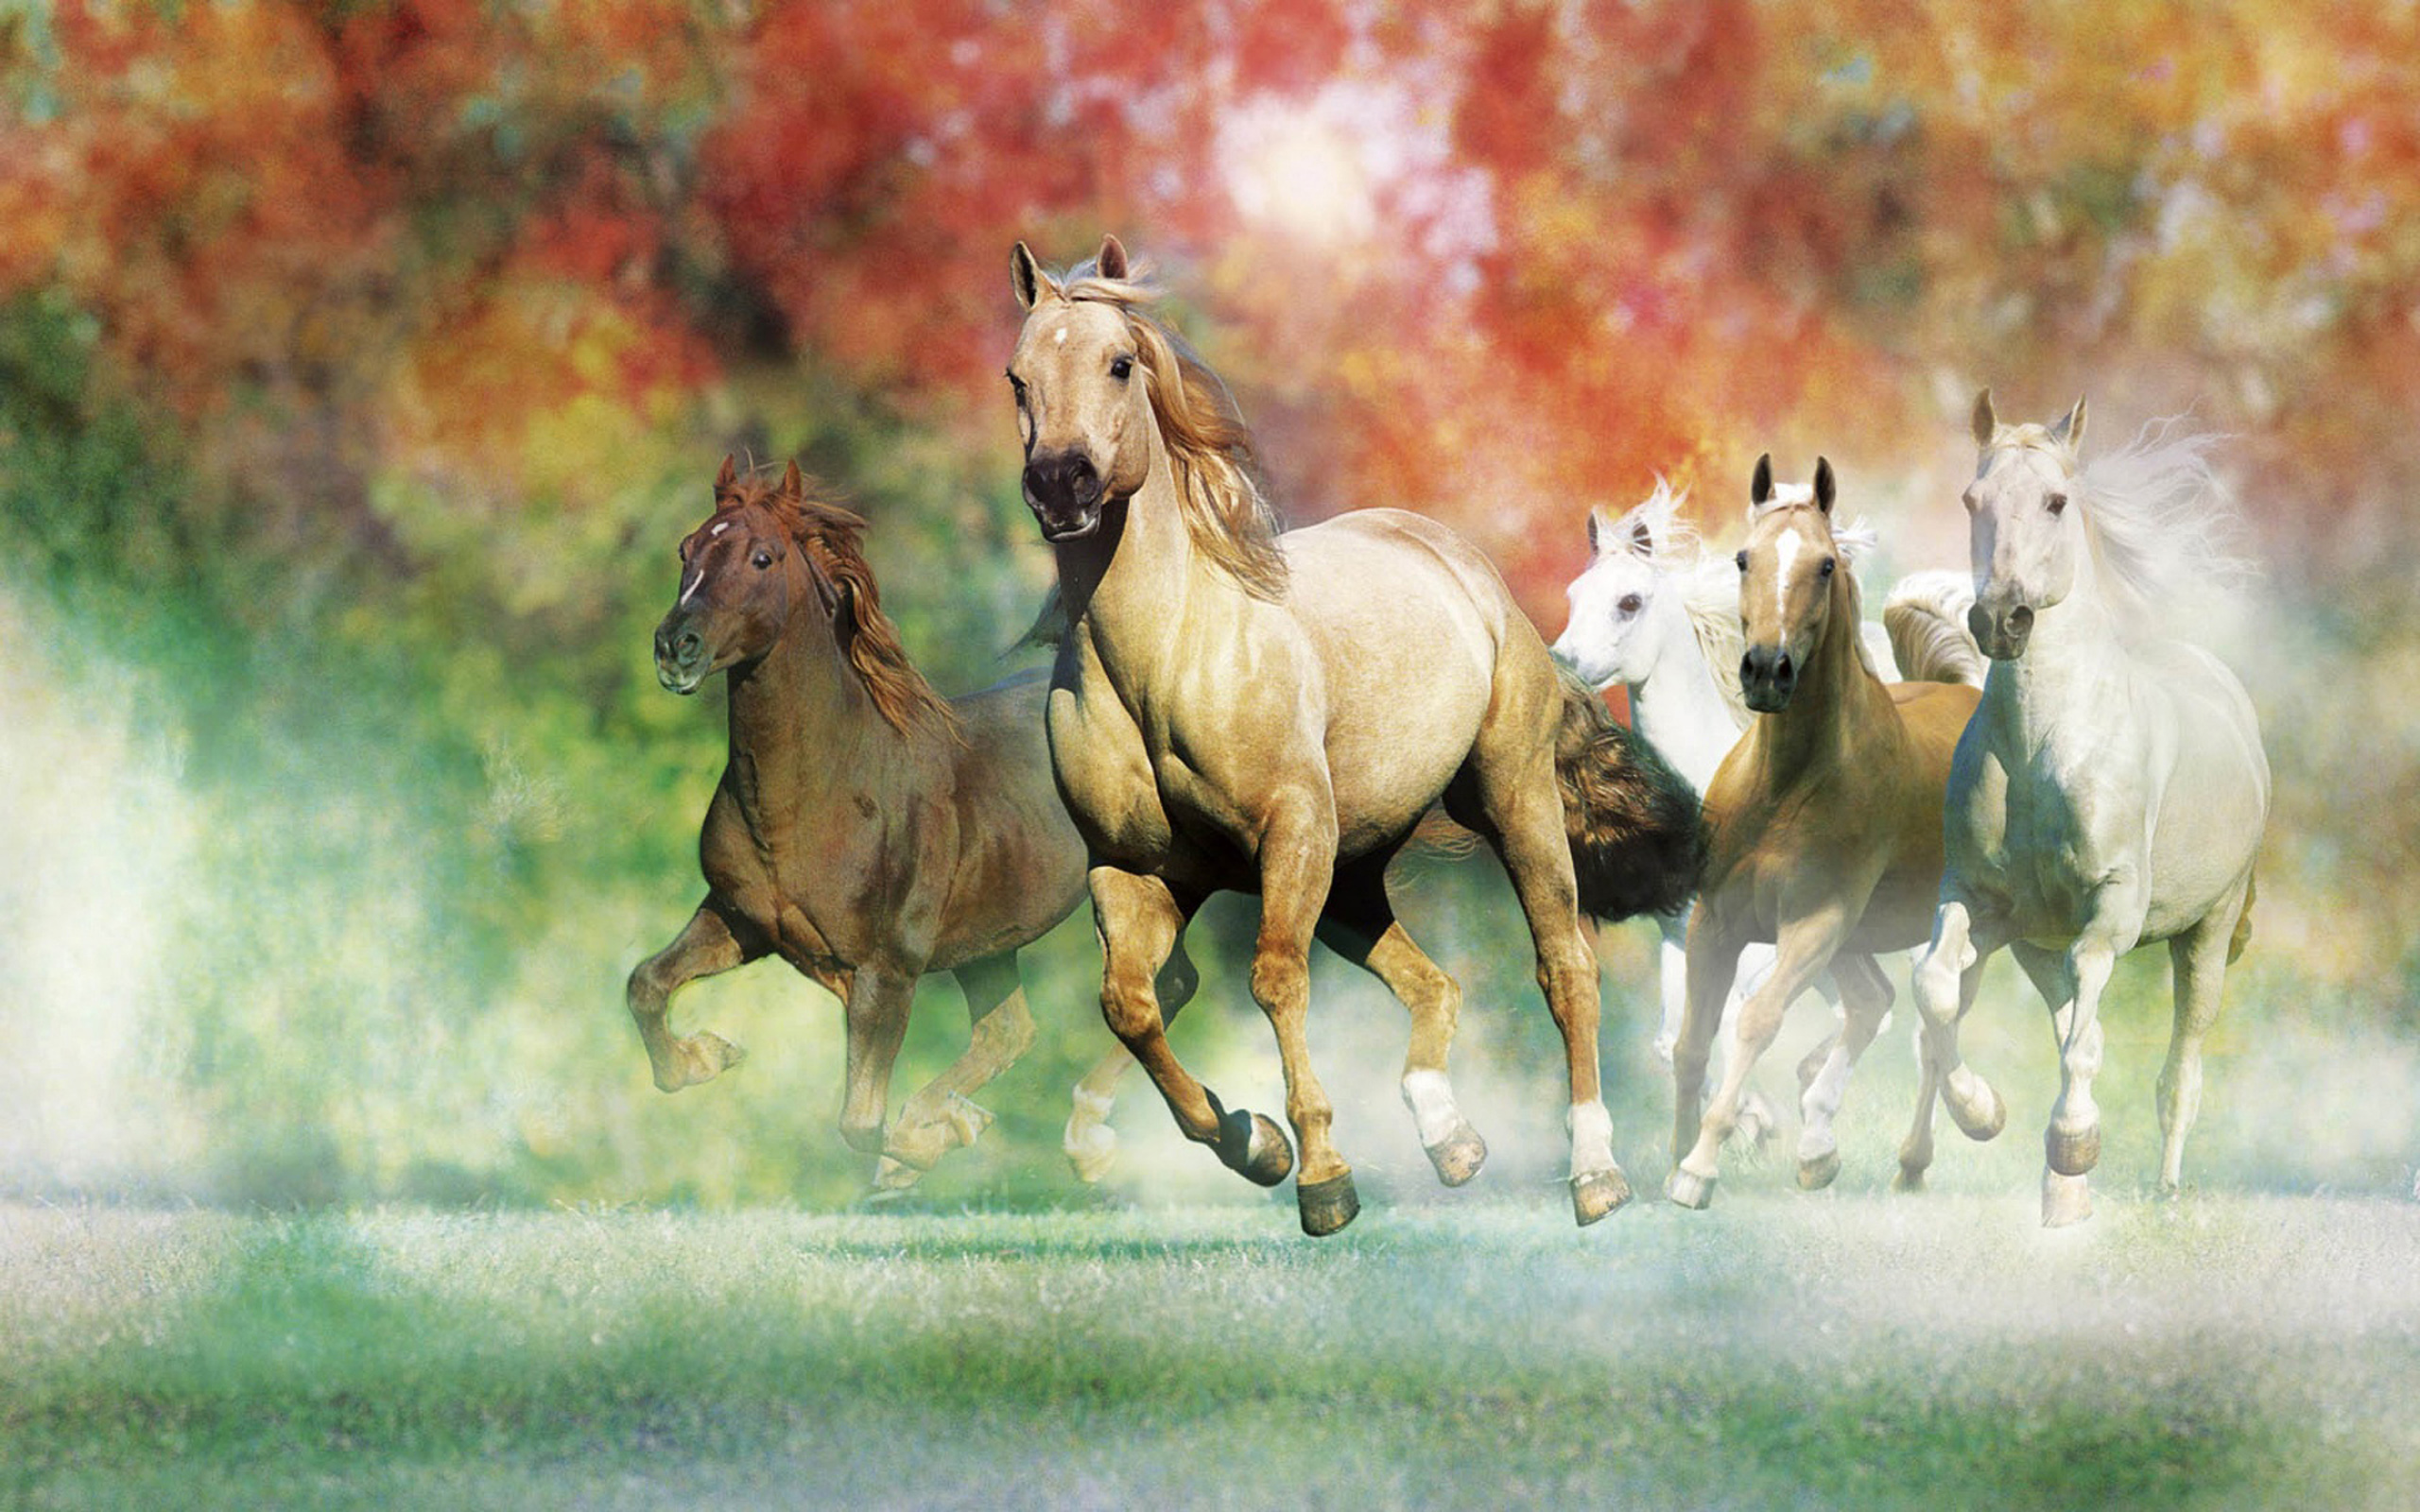 Galloping Horses For Desktop Wallpapers 2560x1600 : Wallpapers13.com